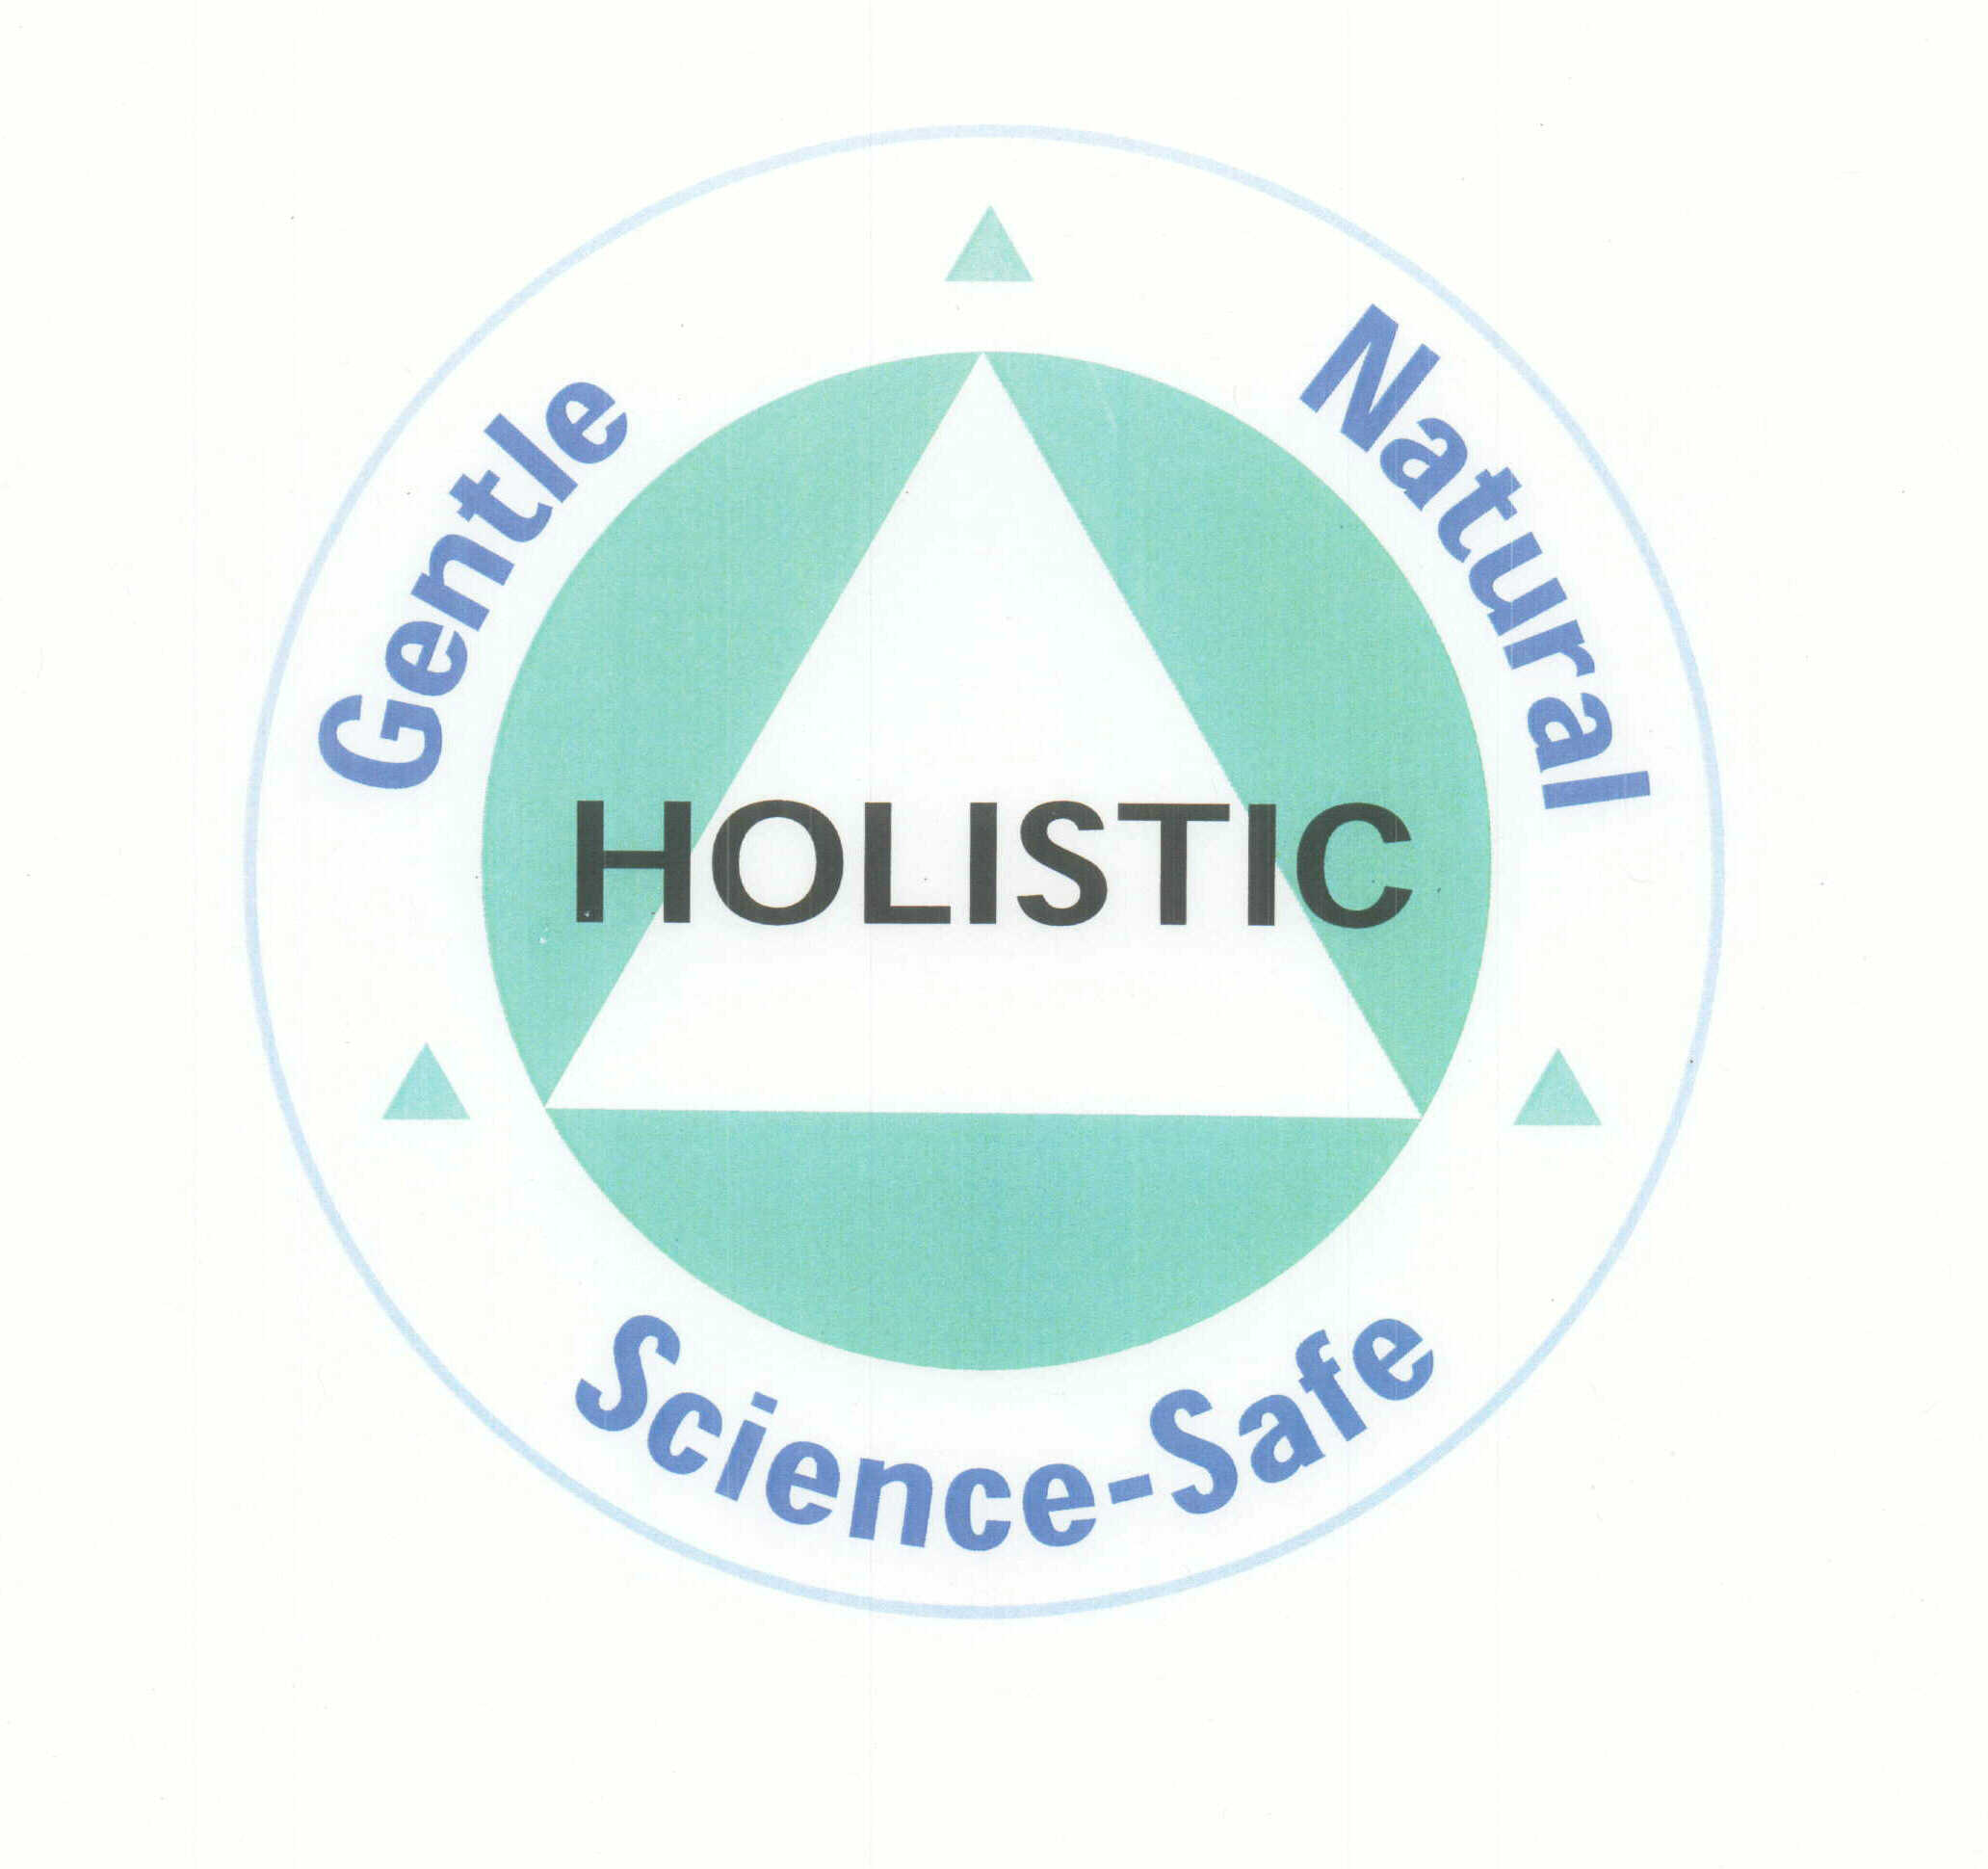  HOLISTIC GENTL, NATURA, SCIENCE-SAFE